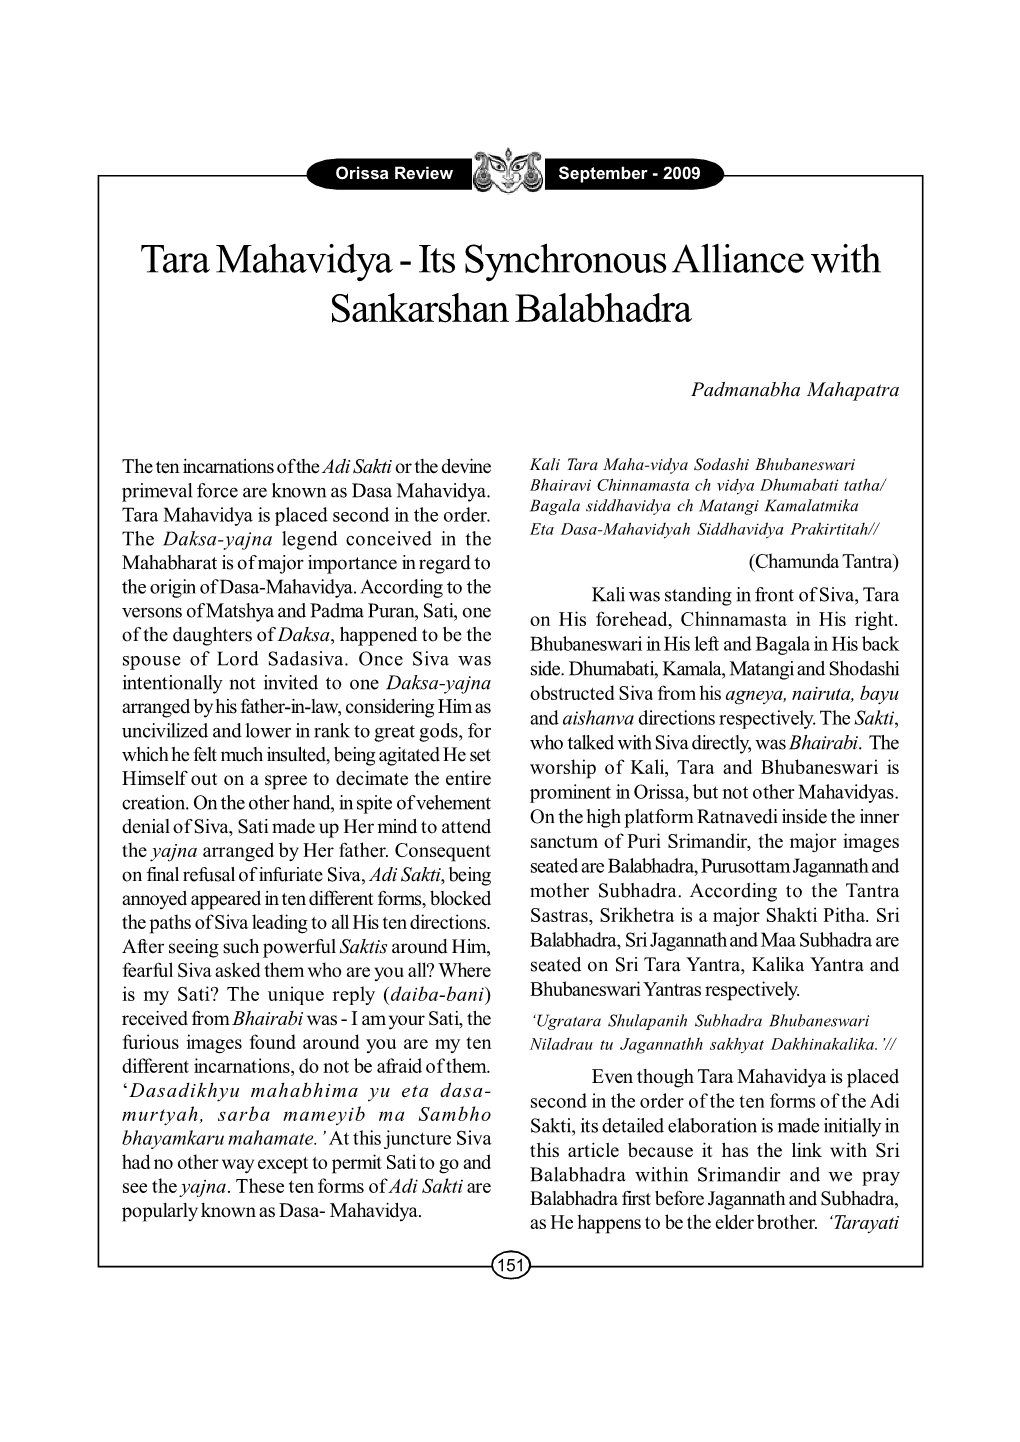 Tara Mahavidya - Its Synchronous Alliance with Sankarshan Balabhadra